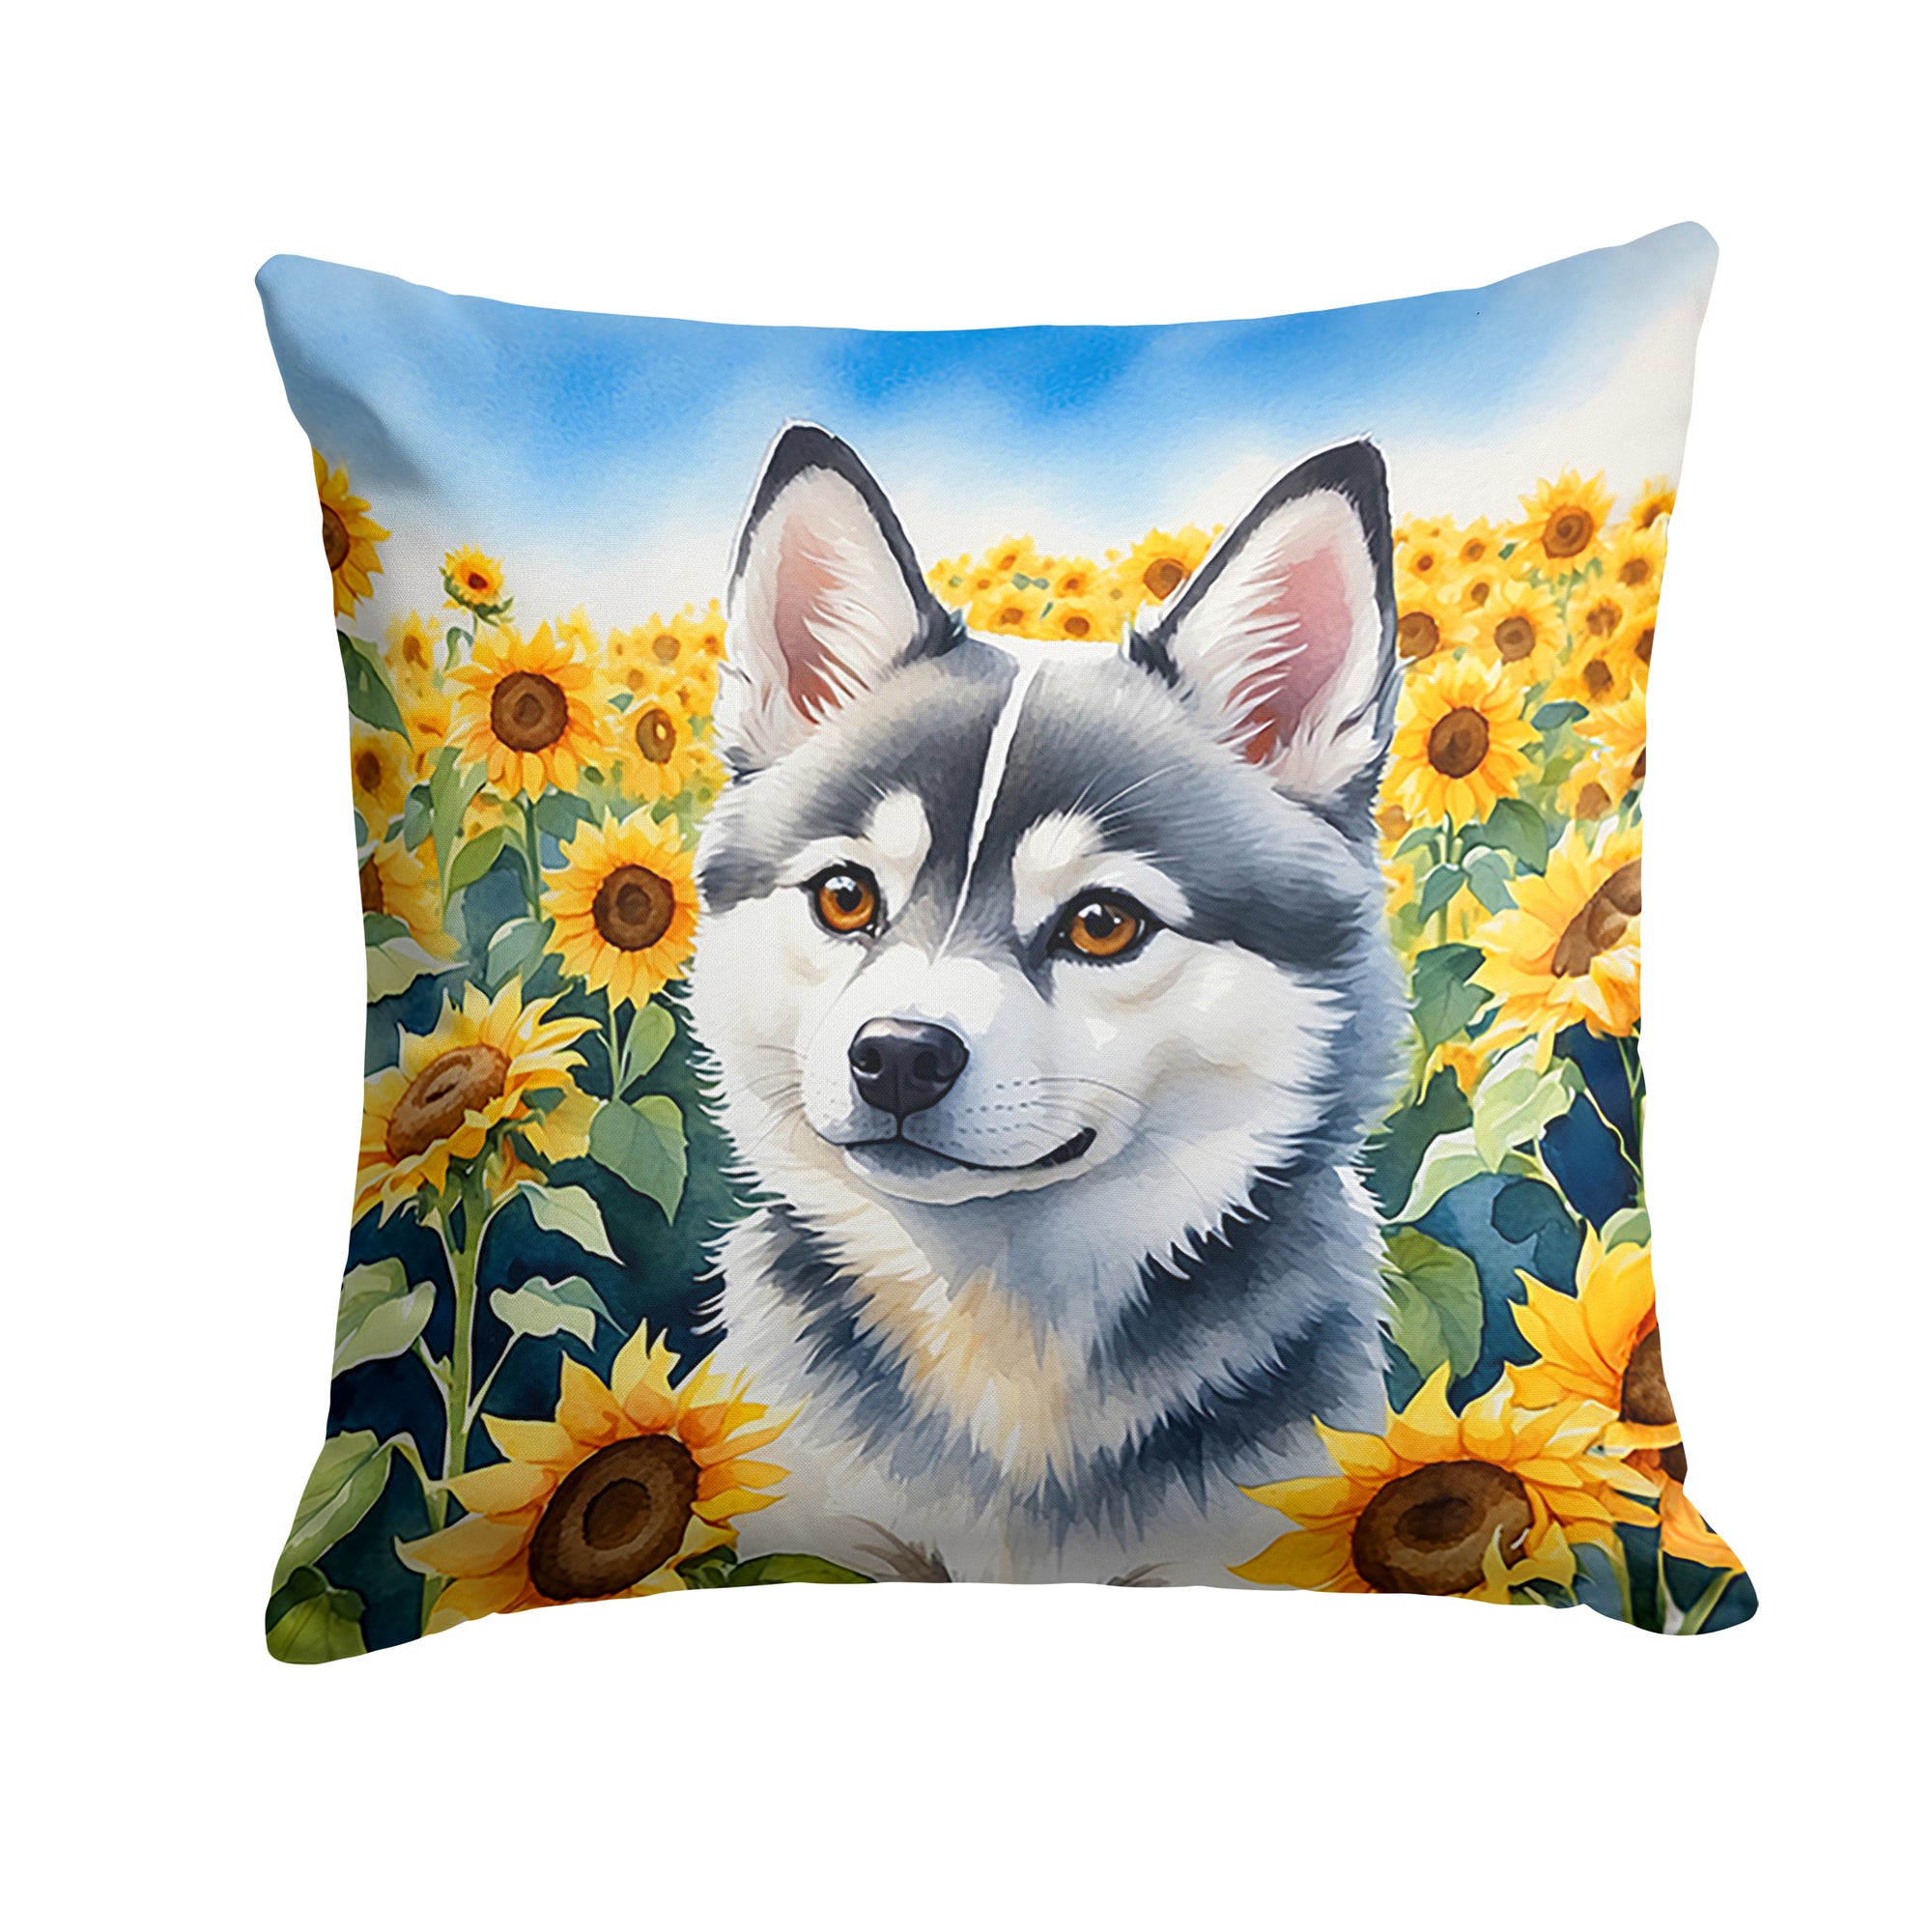 Buy this Alaskan Klee Kai in Sunflowers Throw Pillow